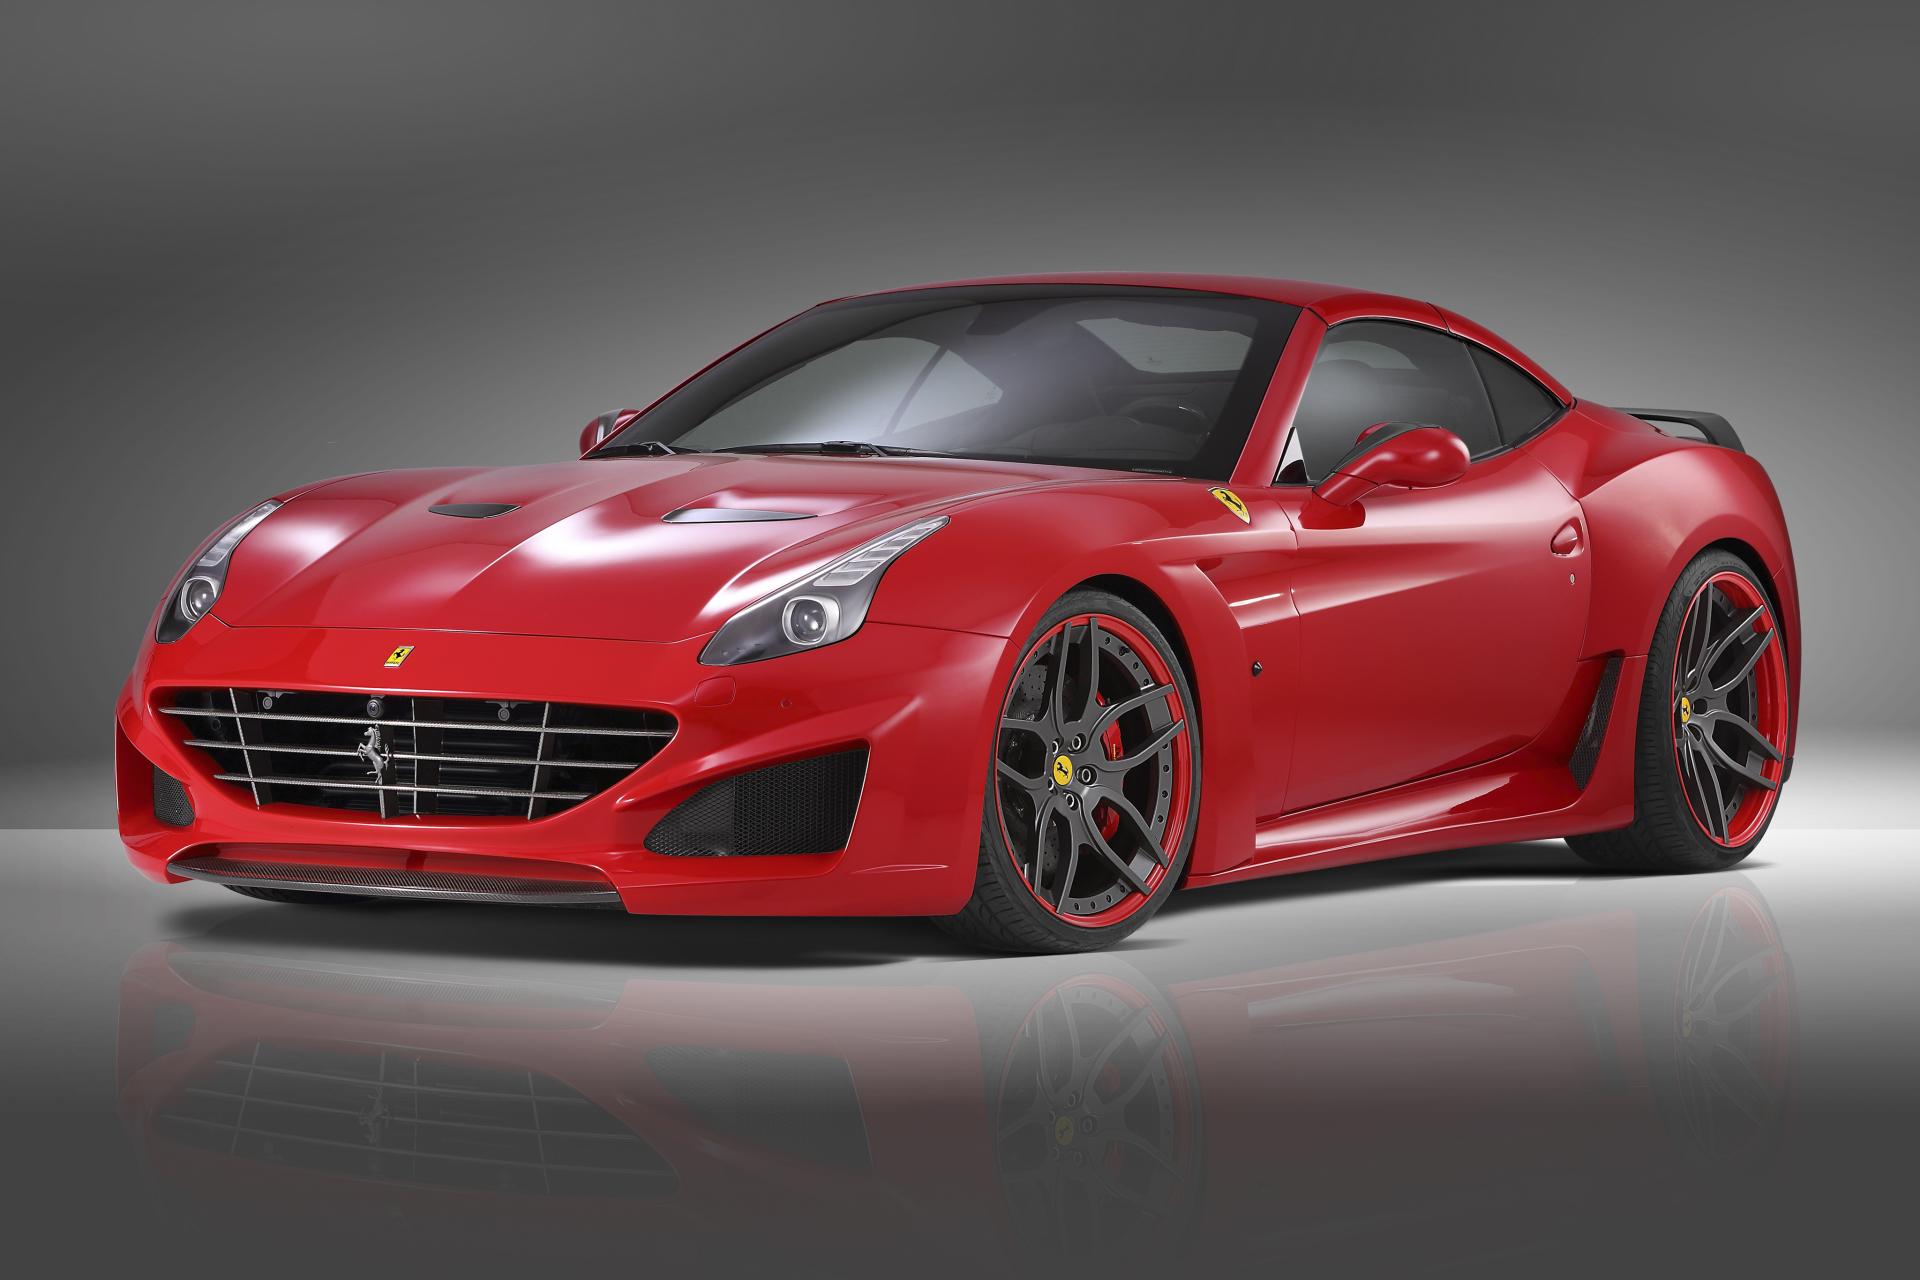 Ferrari California T N-Largo at 1280 x 960 size wallpapers HD quality